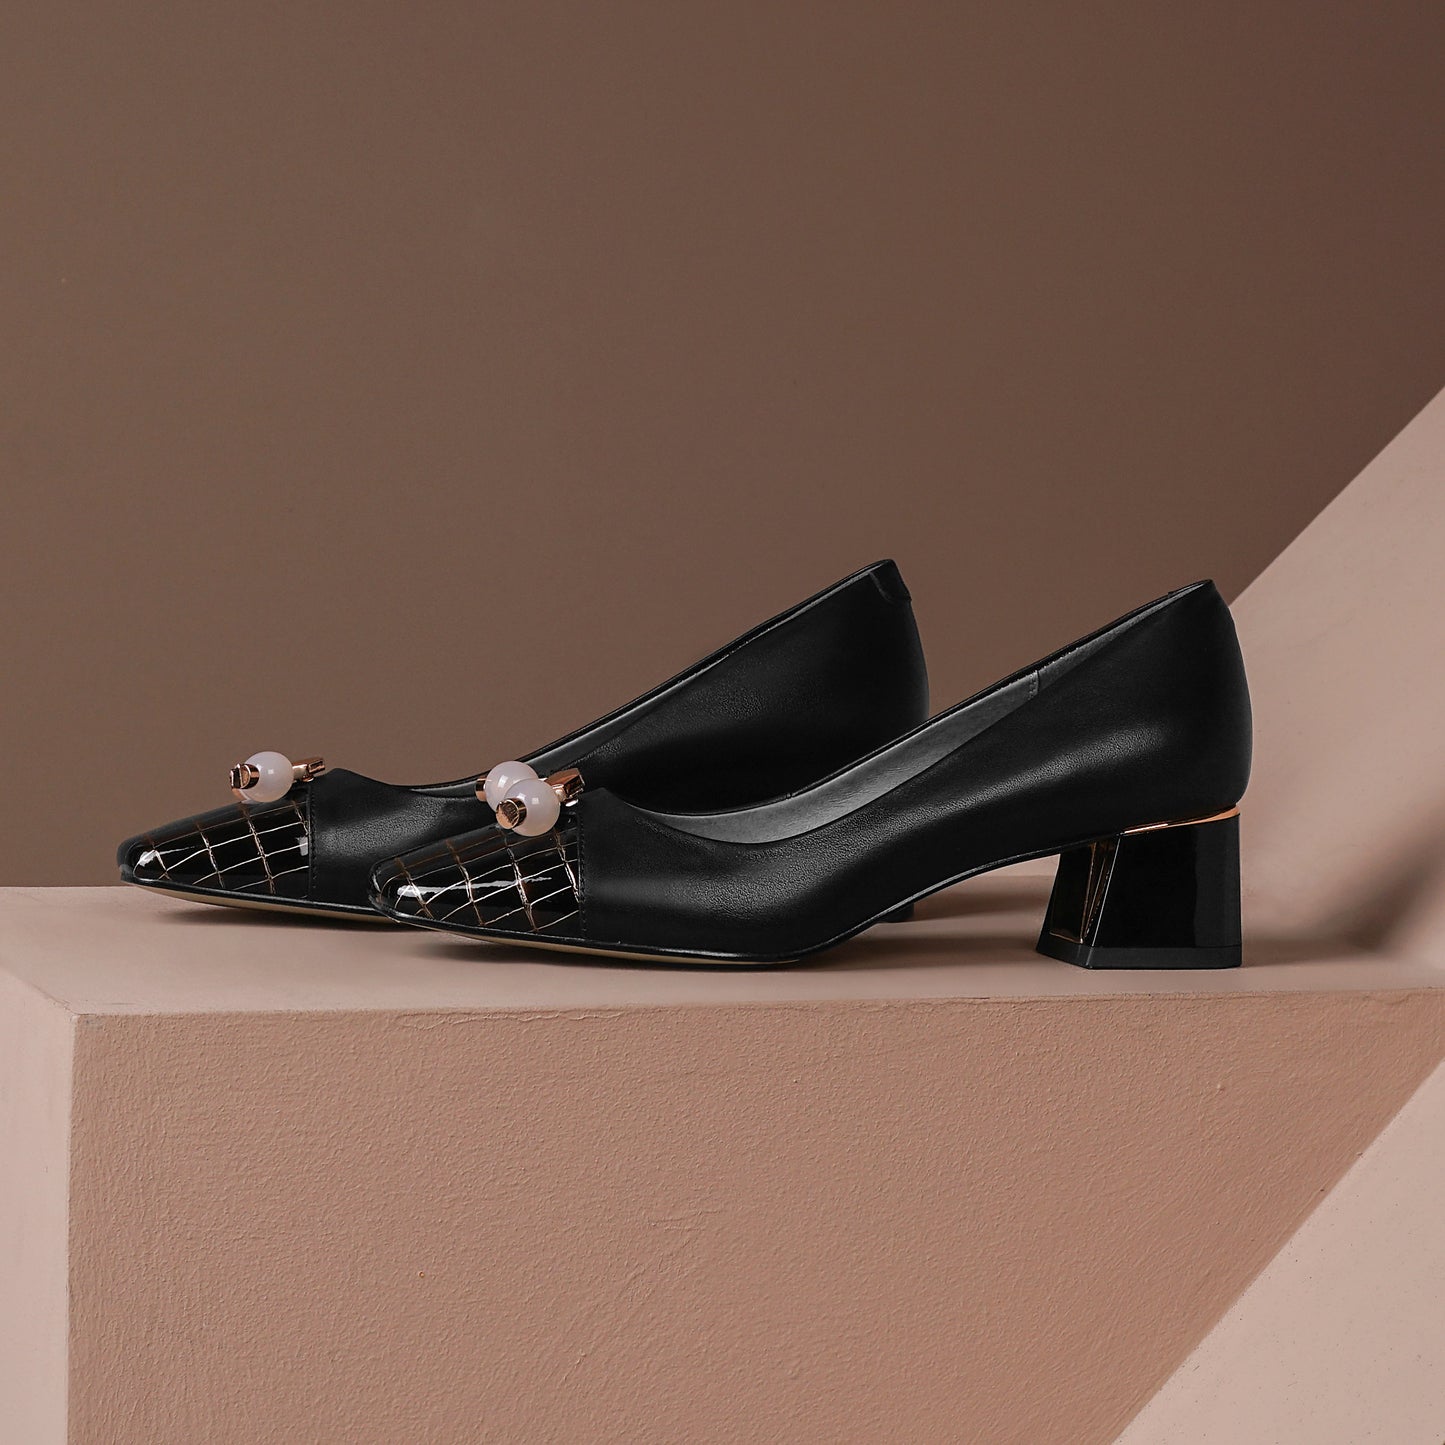 TinaCus Genuine Leather Women's Glossy Square Toe Handmade Comfortable Low Block Heel Slip On Modern Pump Shoes